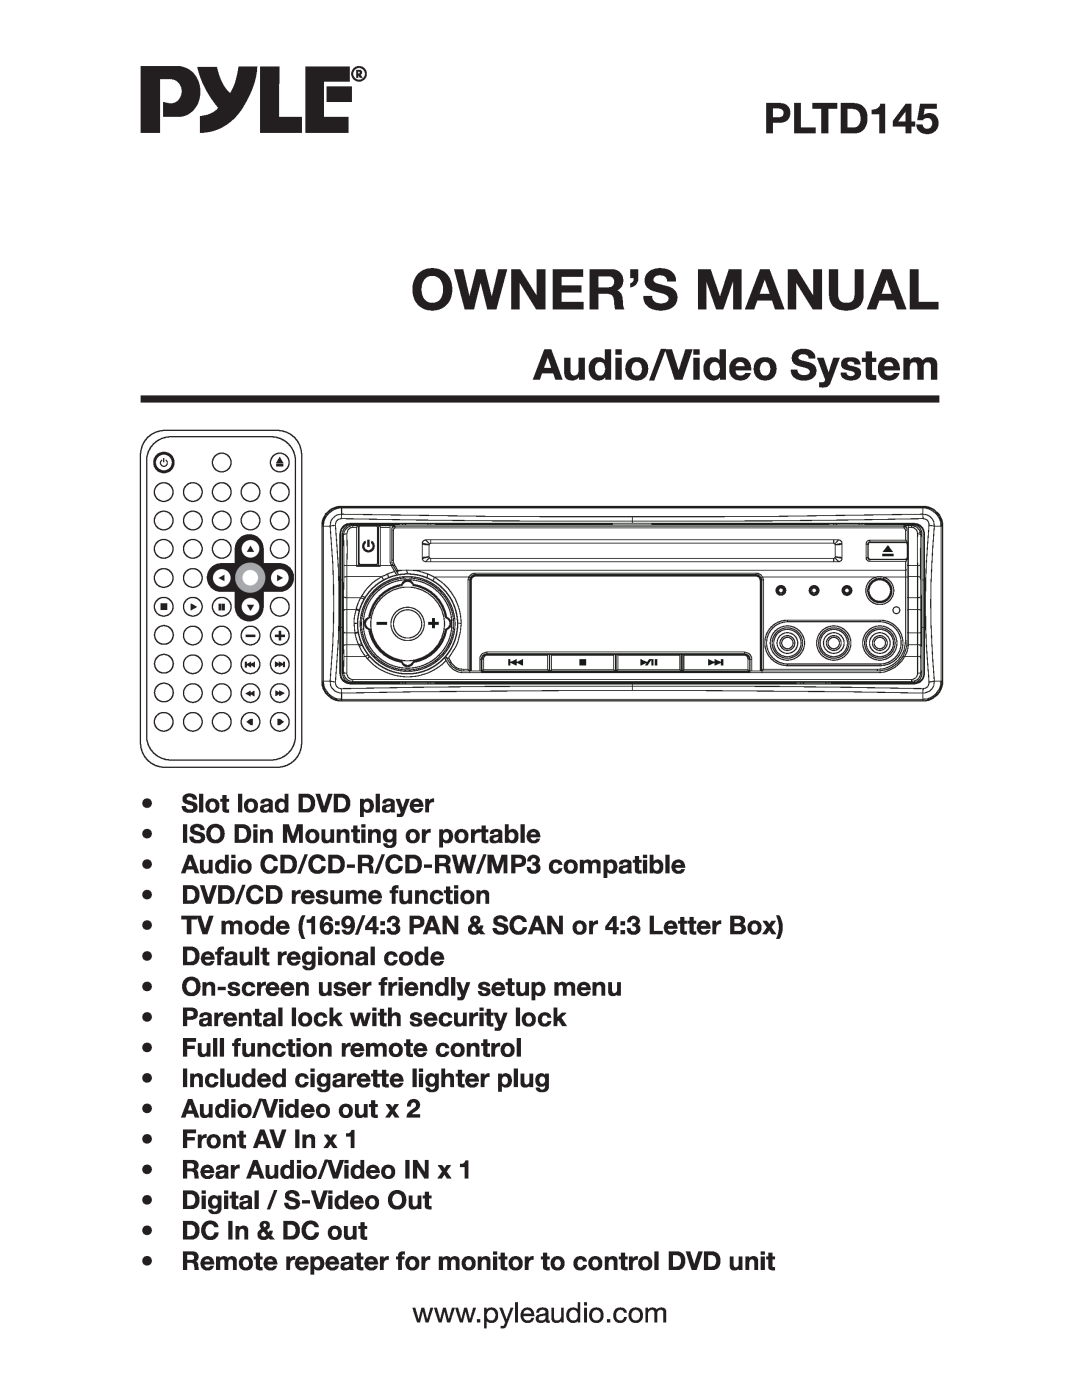 Radio Shack PLTD145 owner manual Audio/Video System 